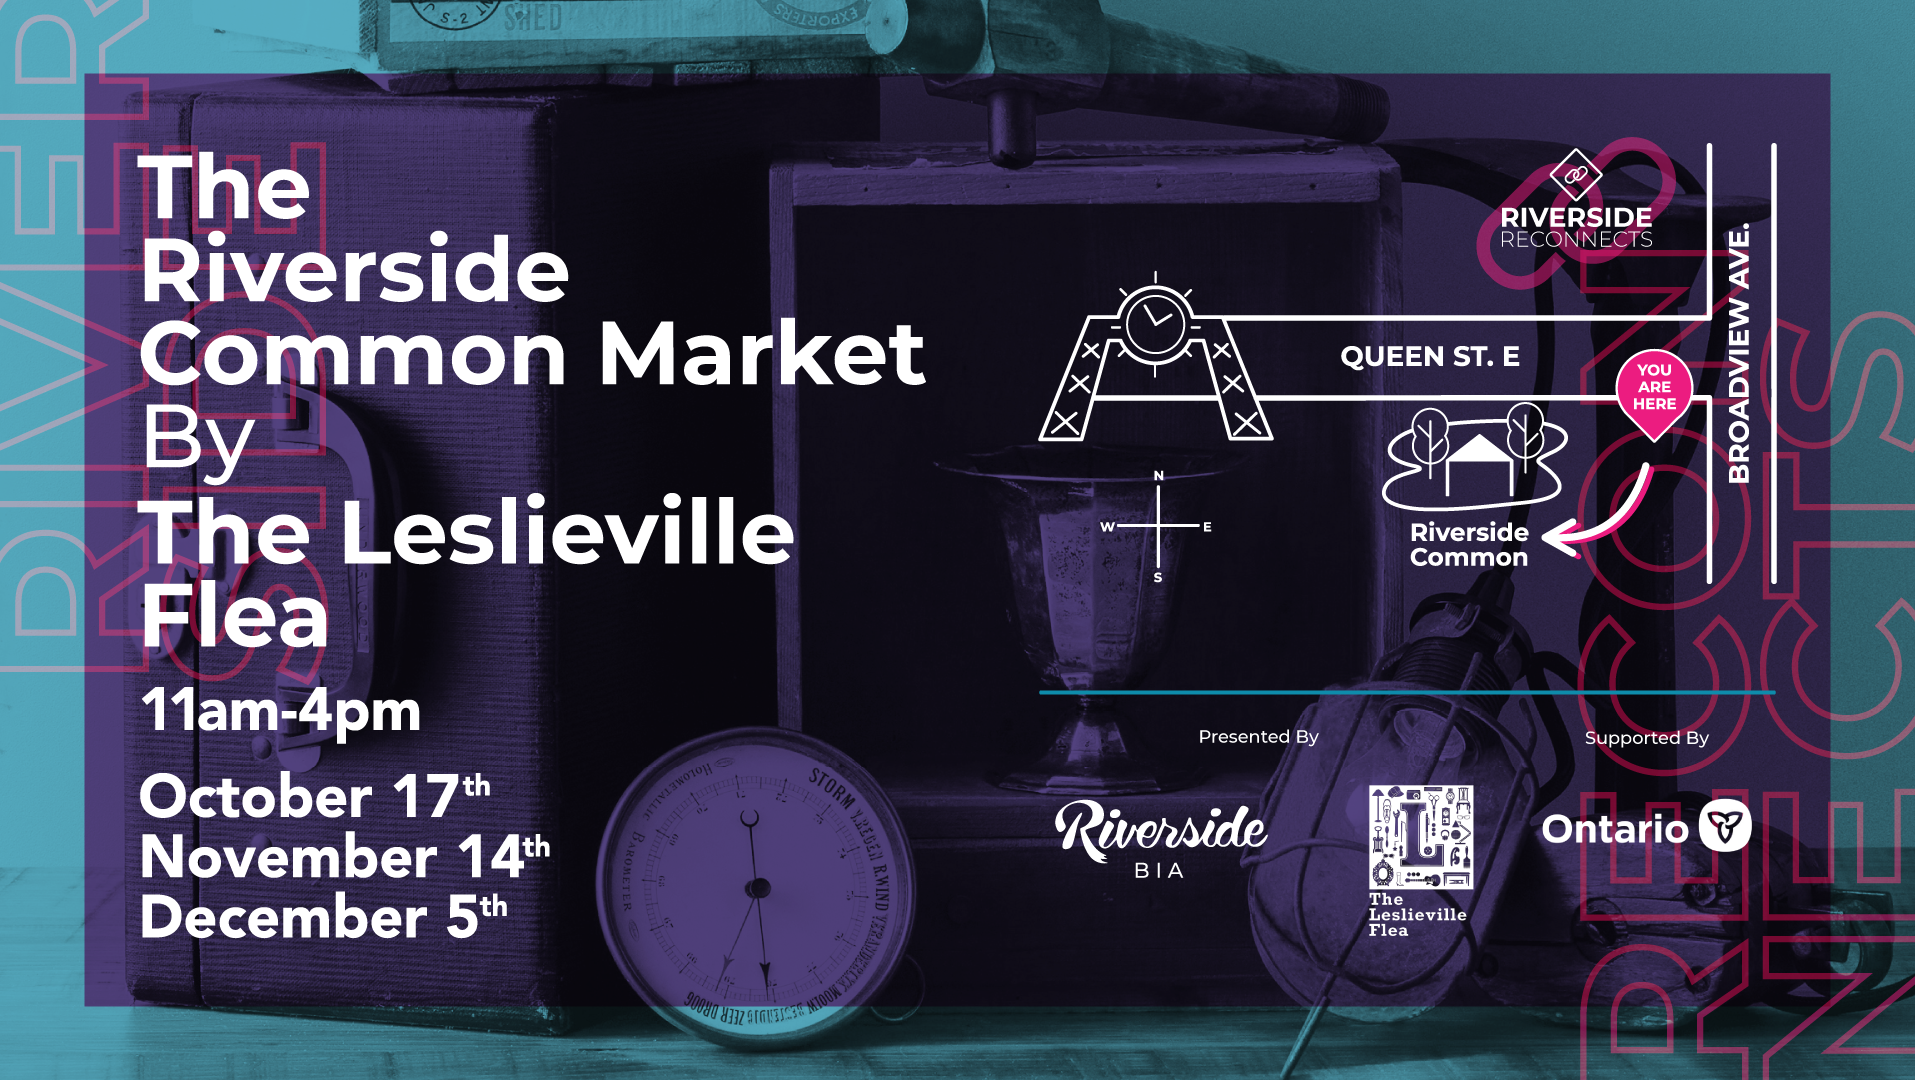 The Riverside Common Market By The Leslieville Flea